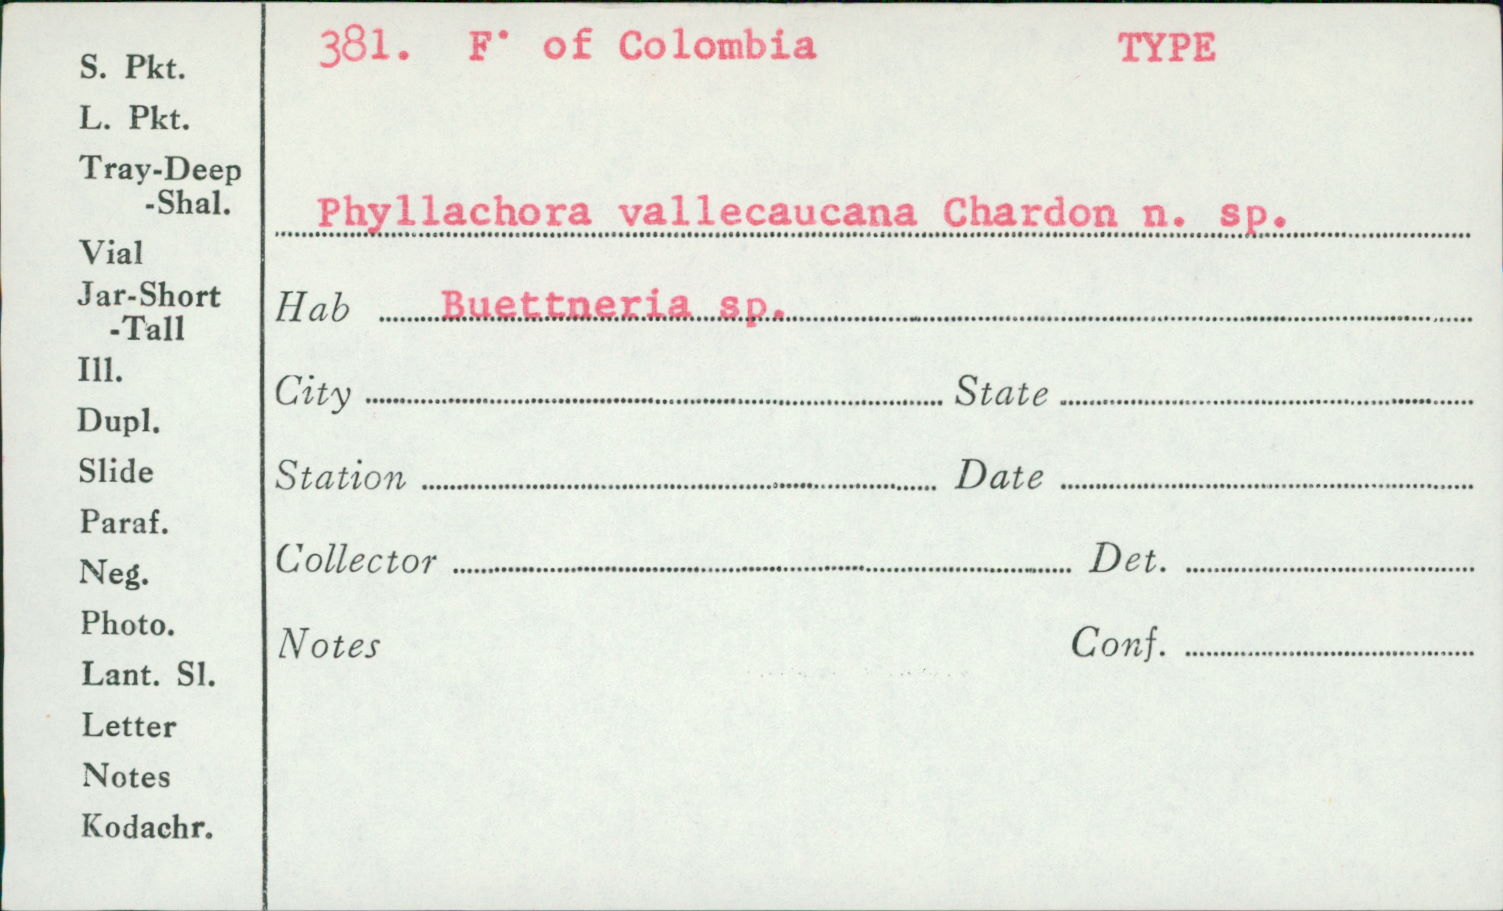 Phyllachora vallecaucana image